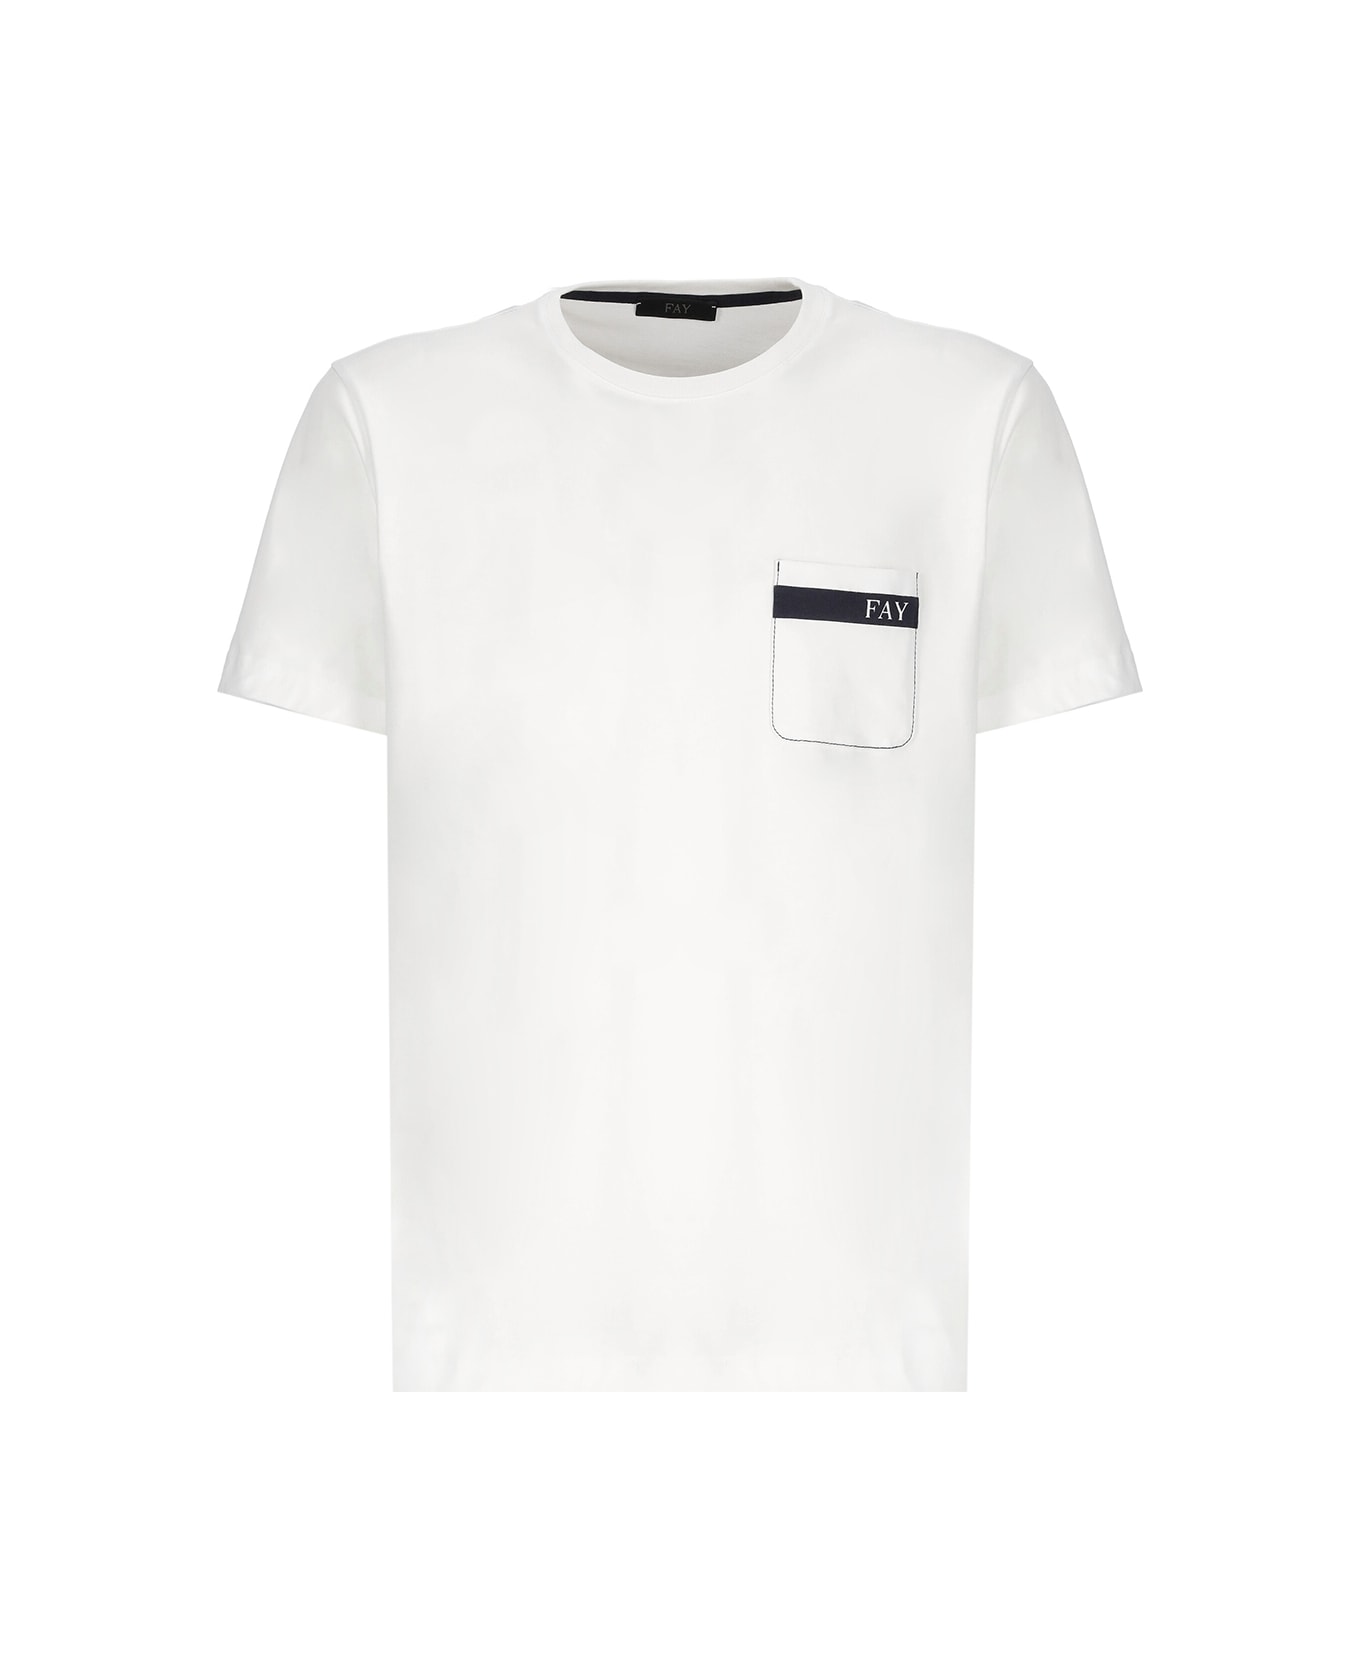 Fay Logoed T-shirt - White シャツ